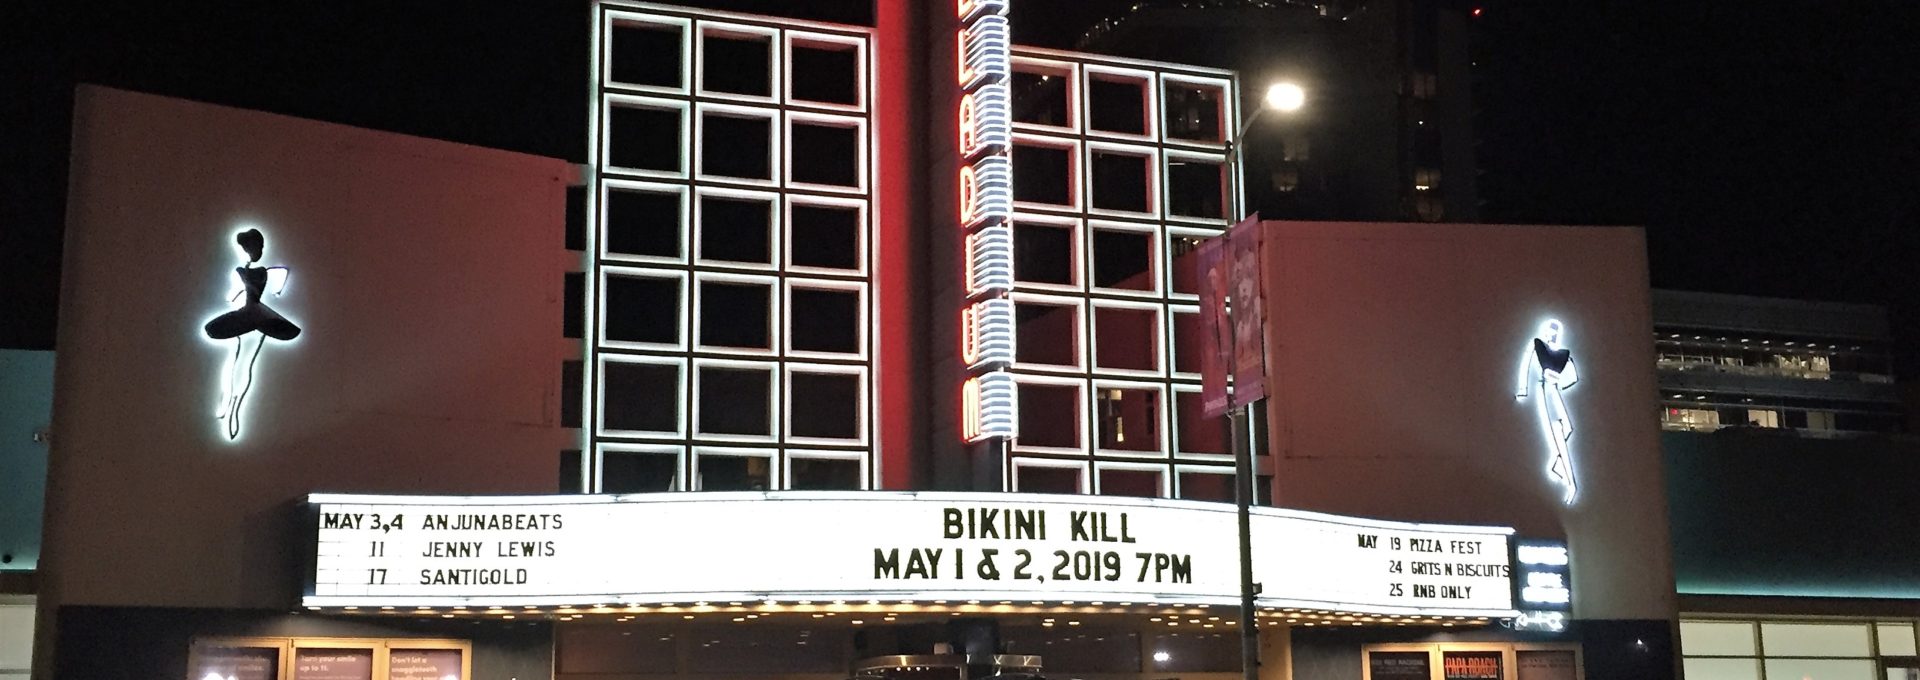 Bikini Kill @ the Hollywood Palladium 5/1/19